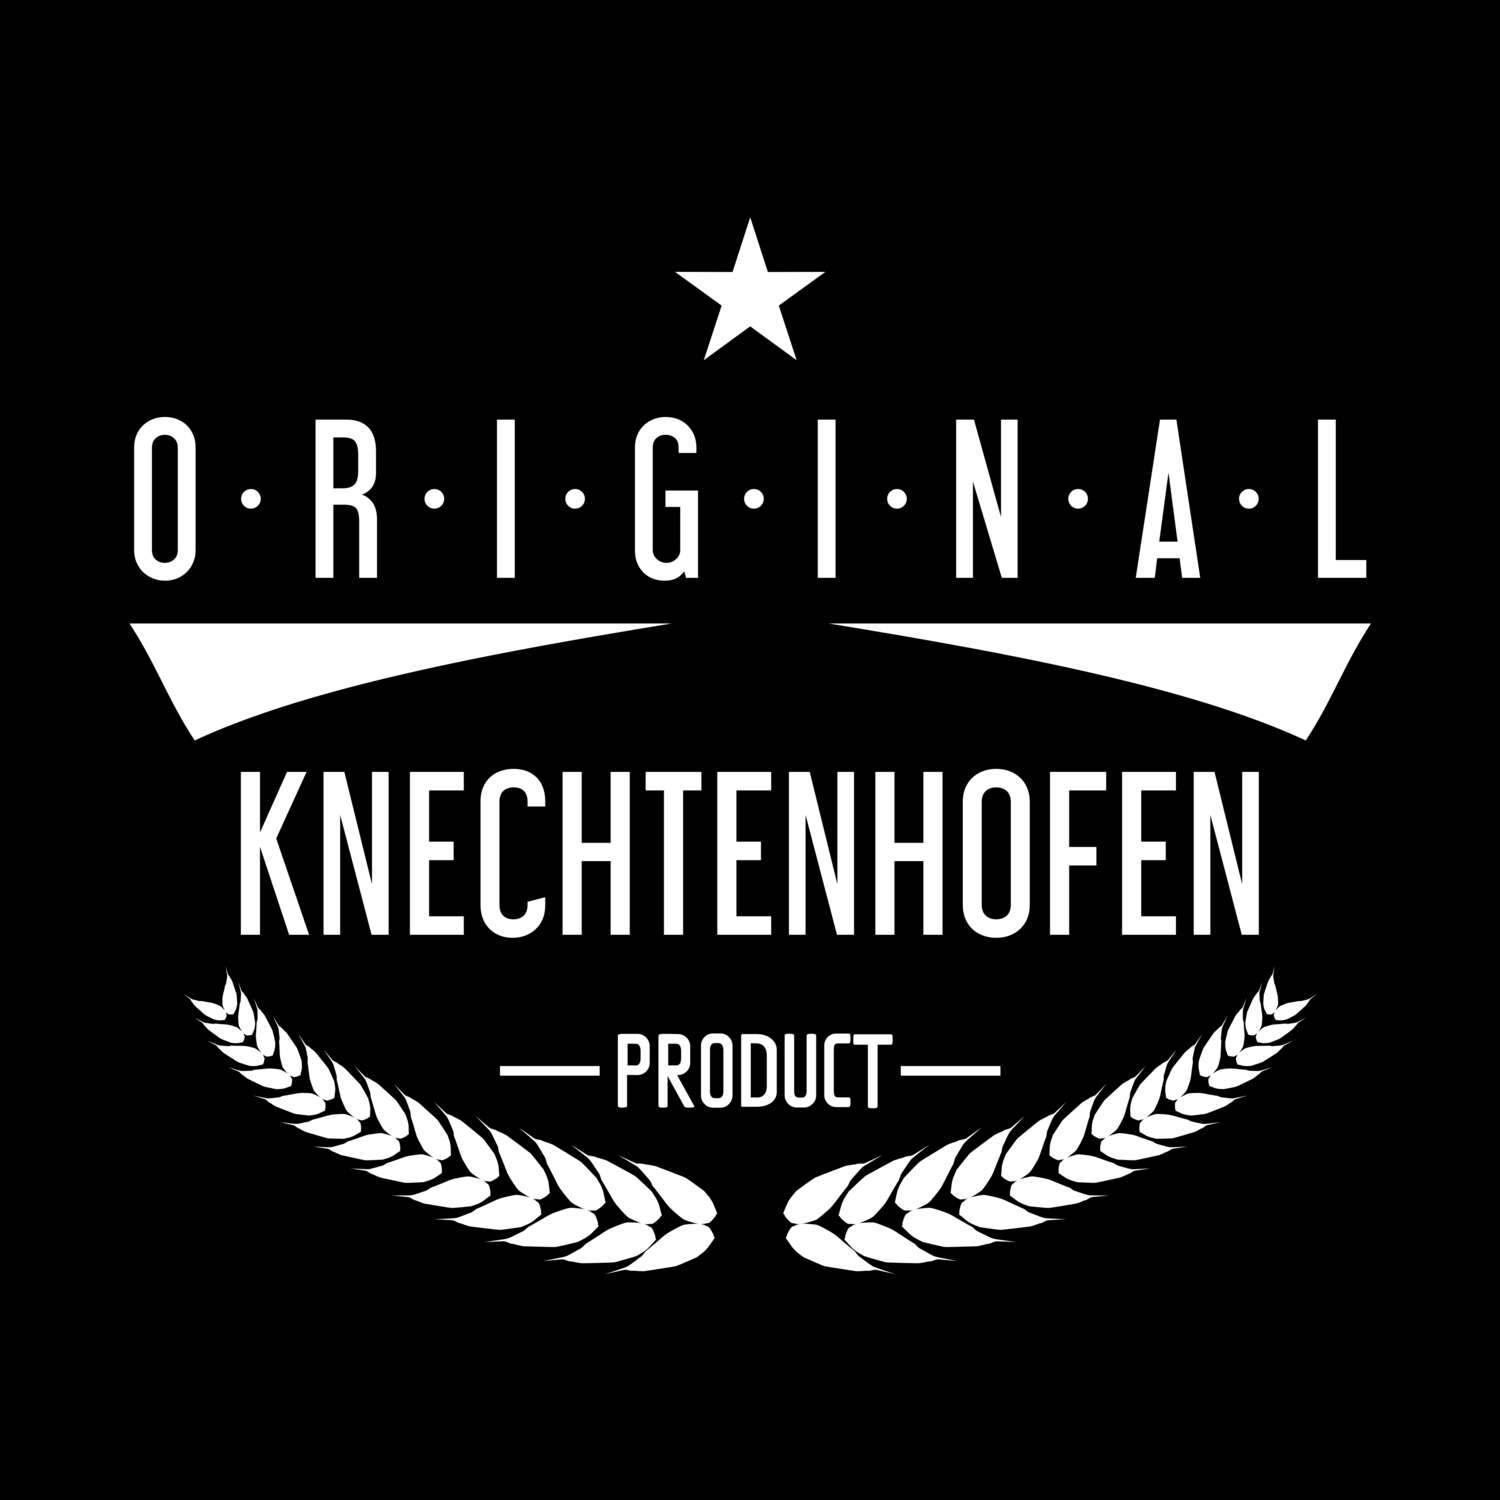 Knechtenhofen T-Shirt »Original Product«